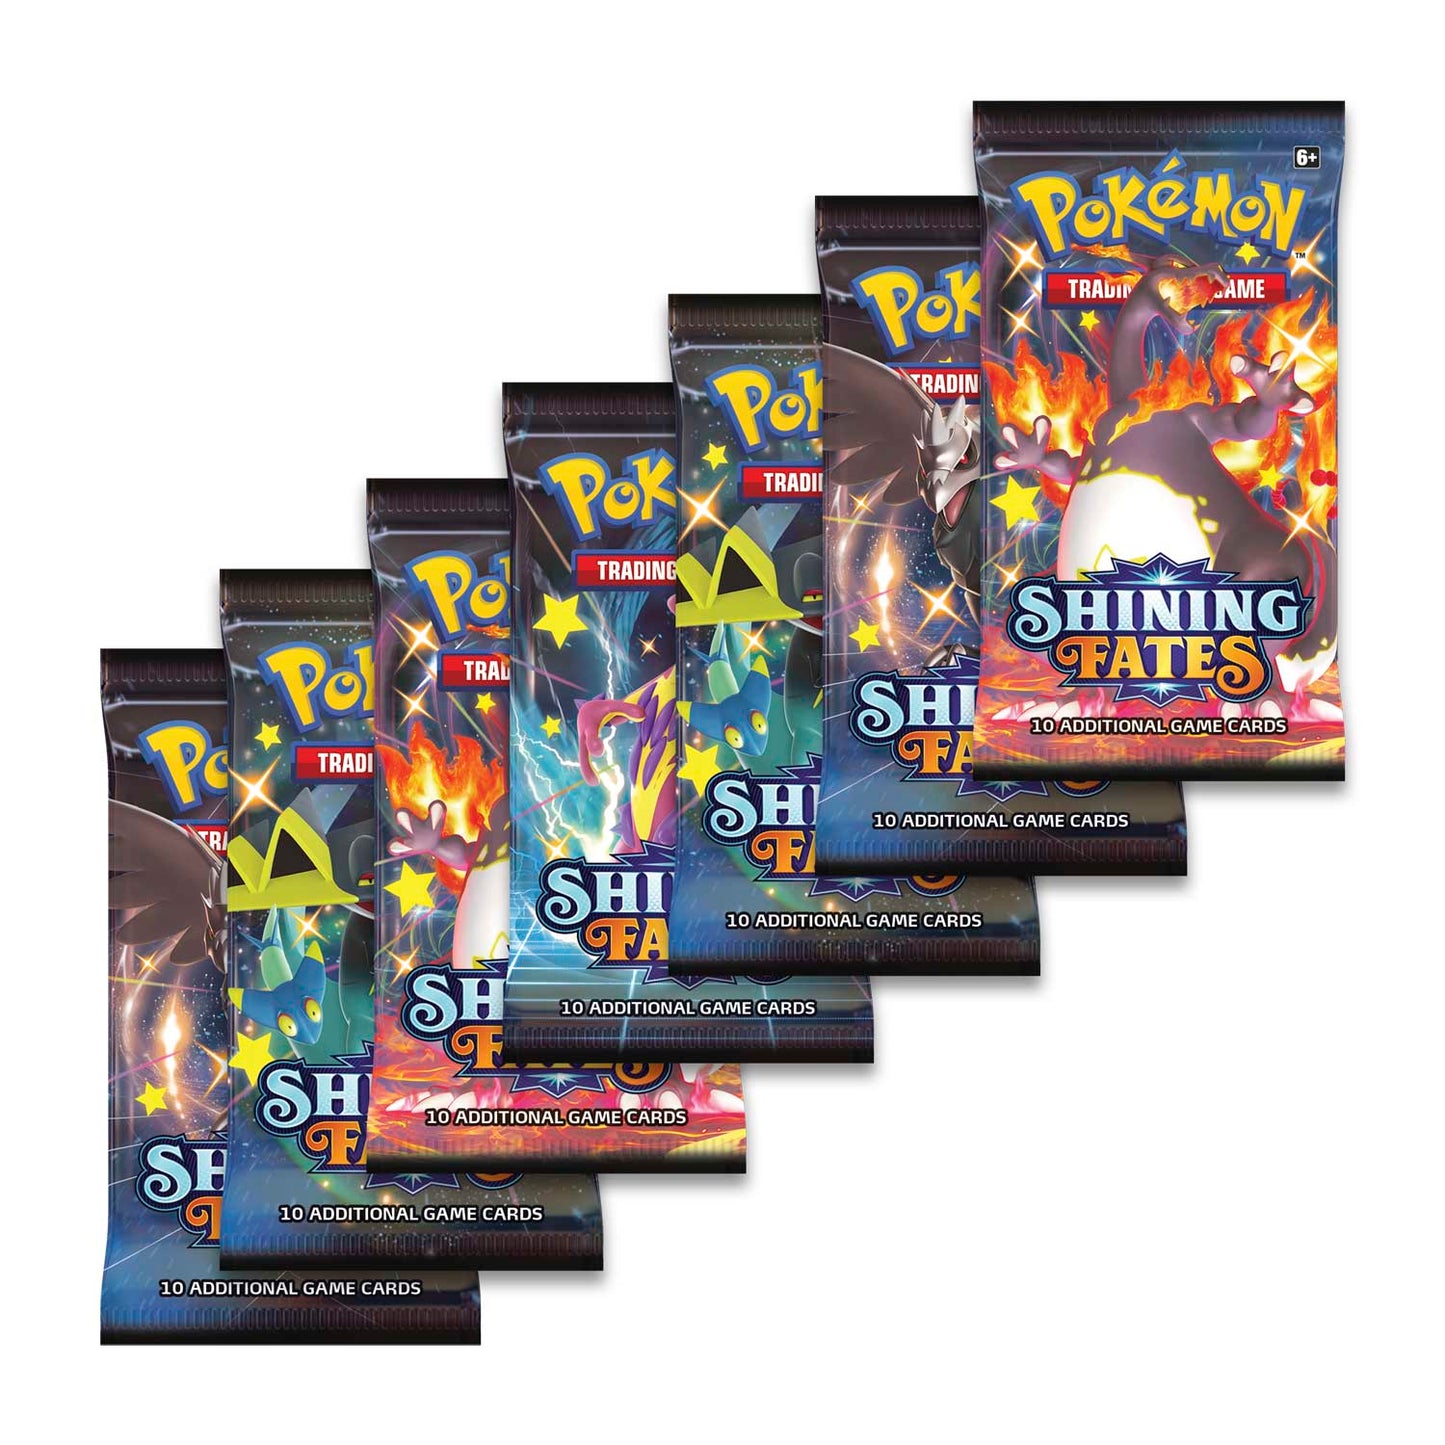 Pokémon TCG: Shining Fates Premium Collection (Shiny Crobat VMAX) Box